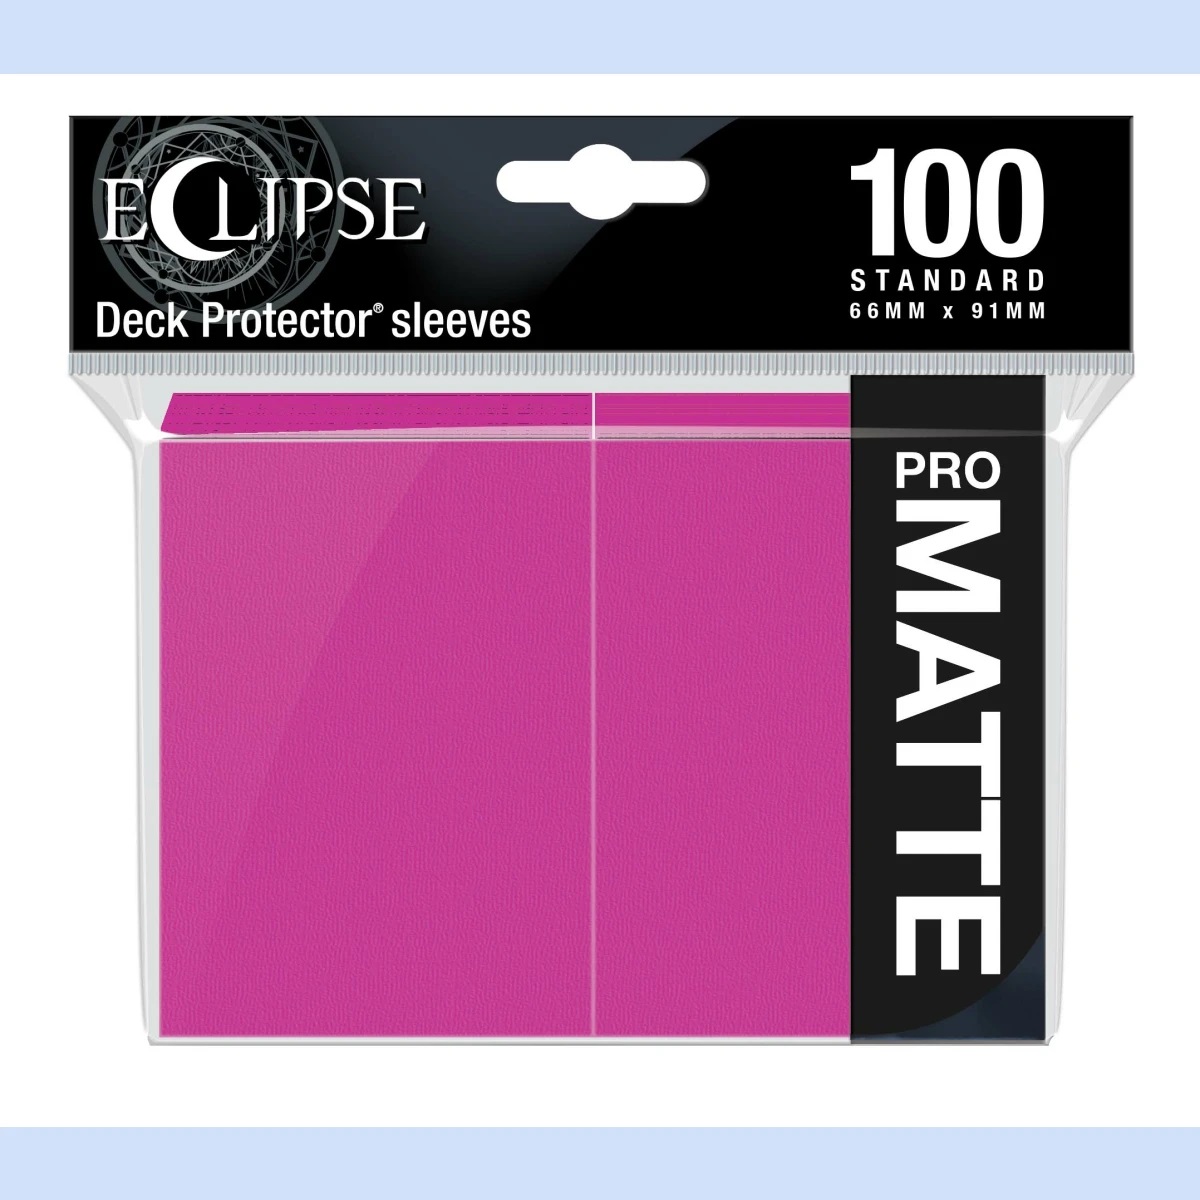 UP Deck Protector ECLIPSE Matte Hot Pink (100ct) von Ultra Pro